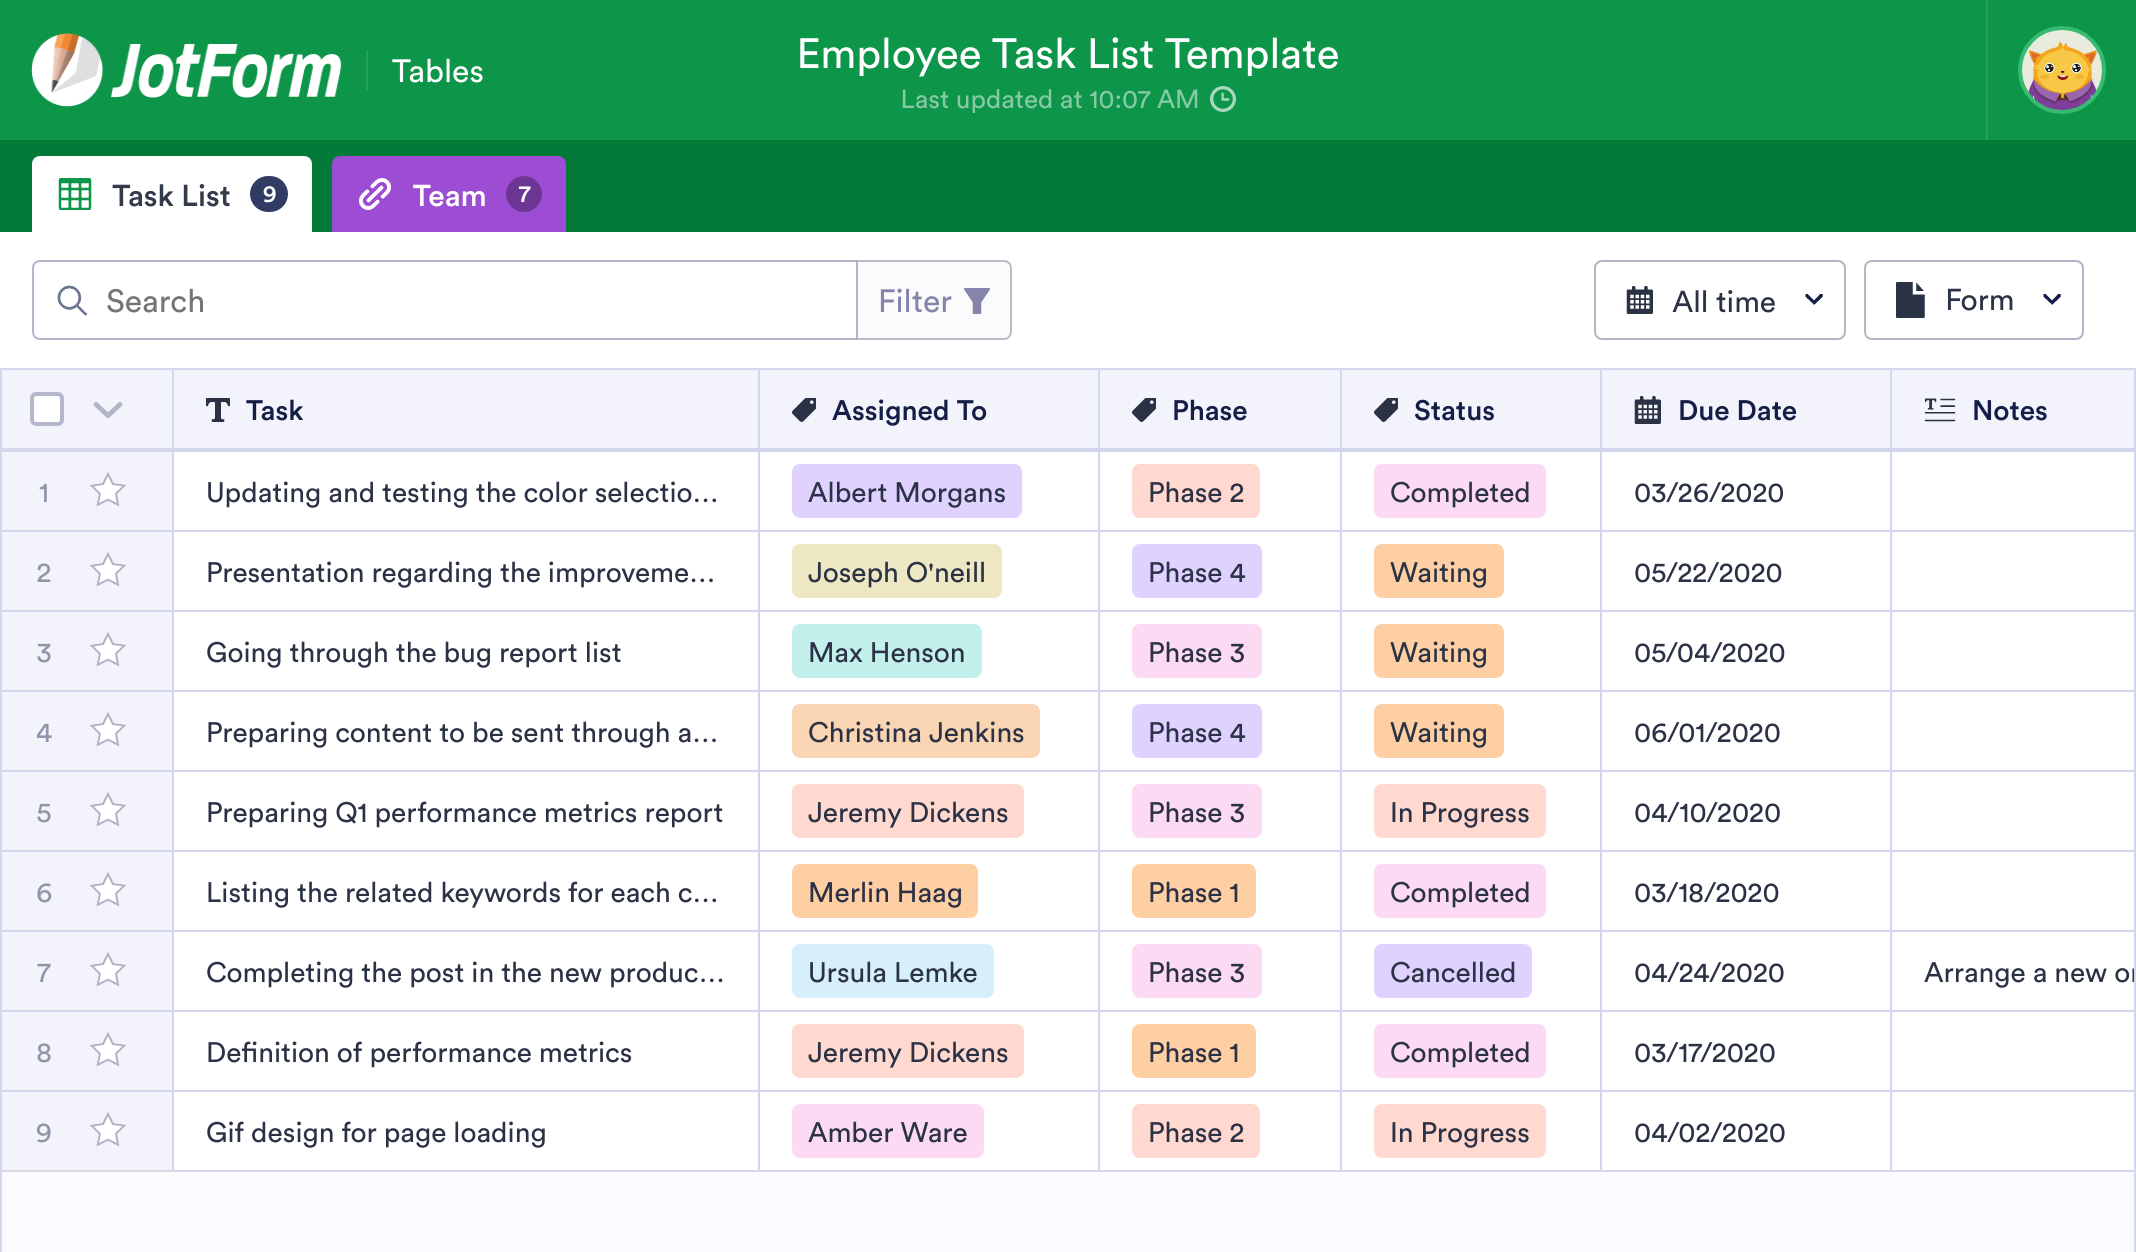 Employee Task List Template JotForm Tables